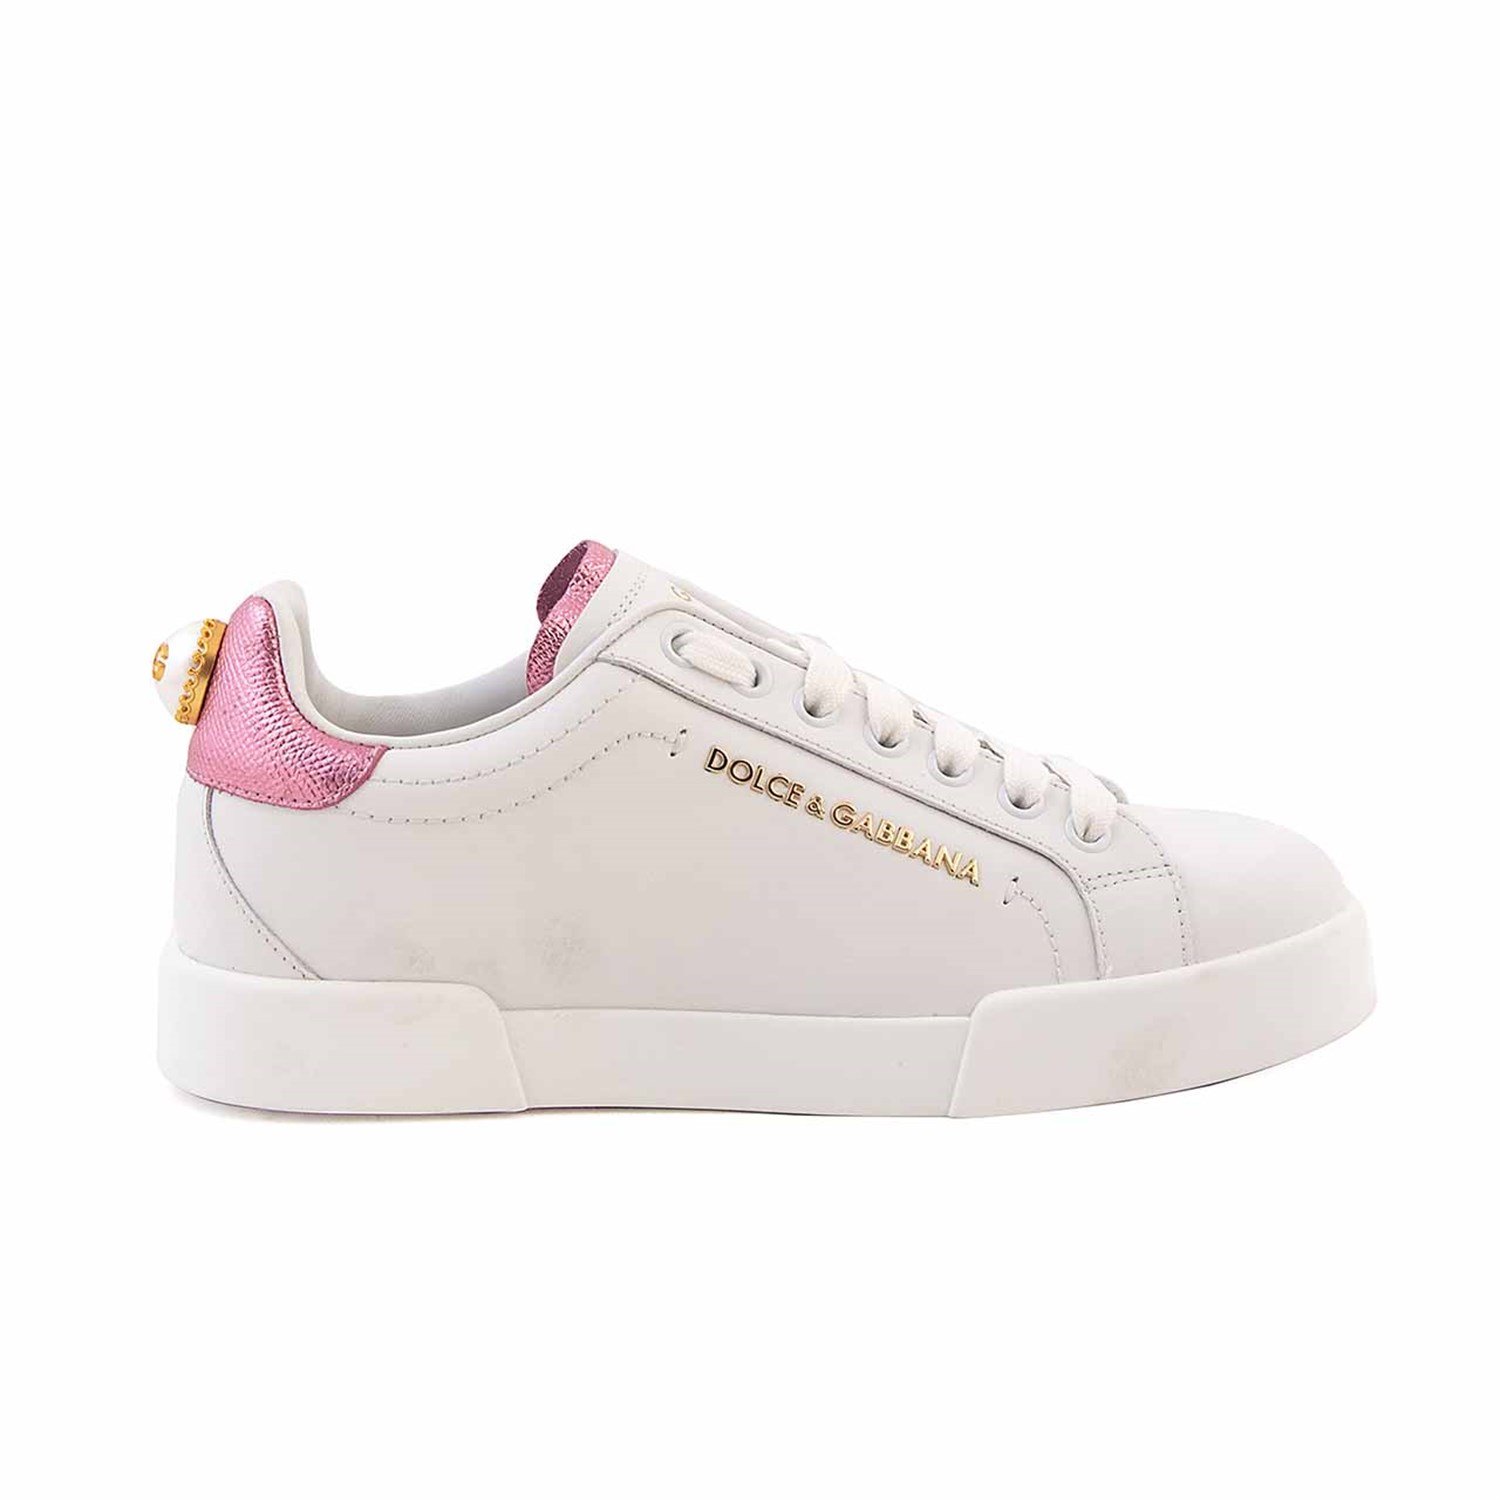 Dolce Gabbana Women's Sports & Sneakers CK1602